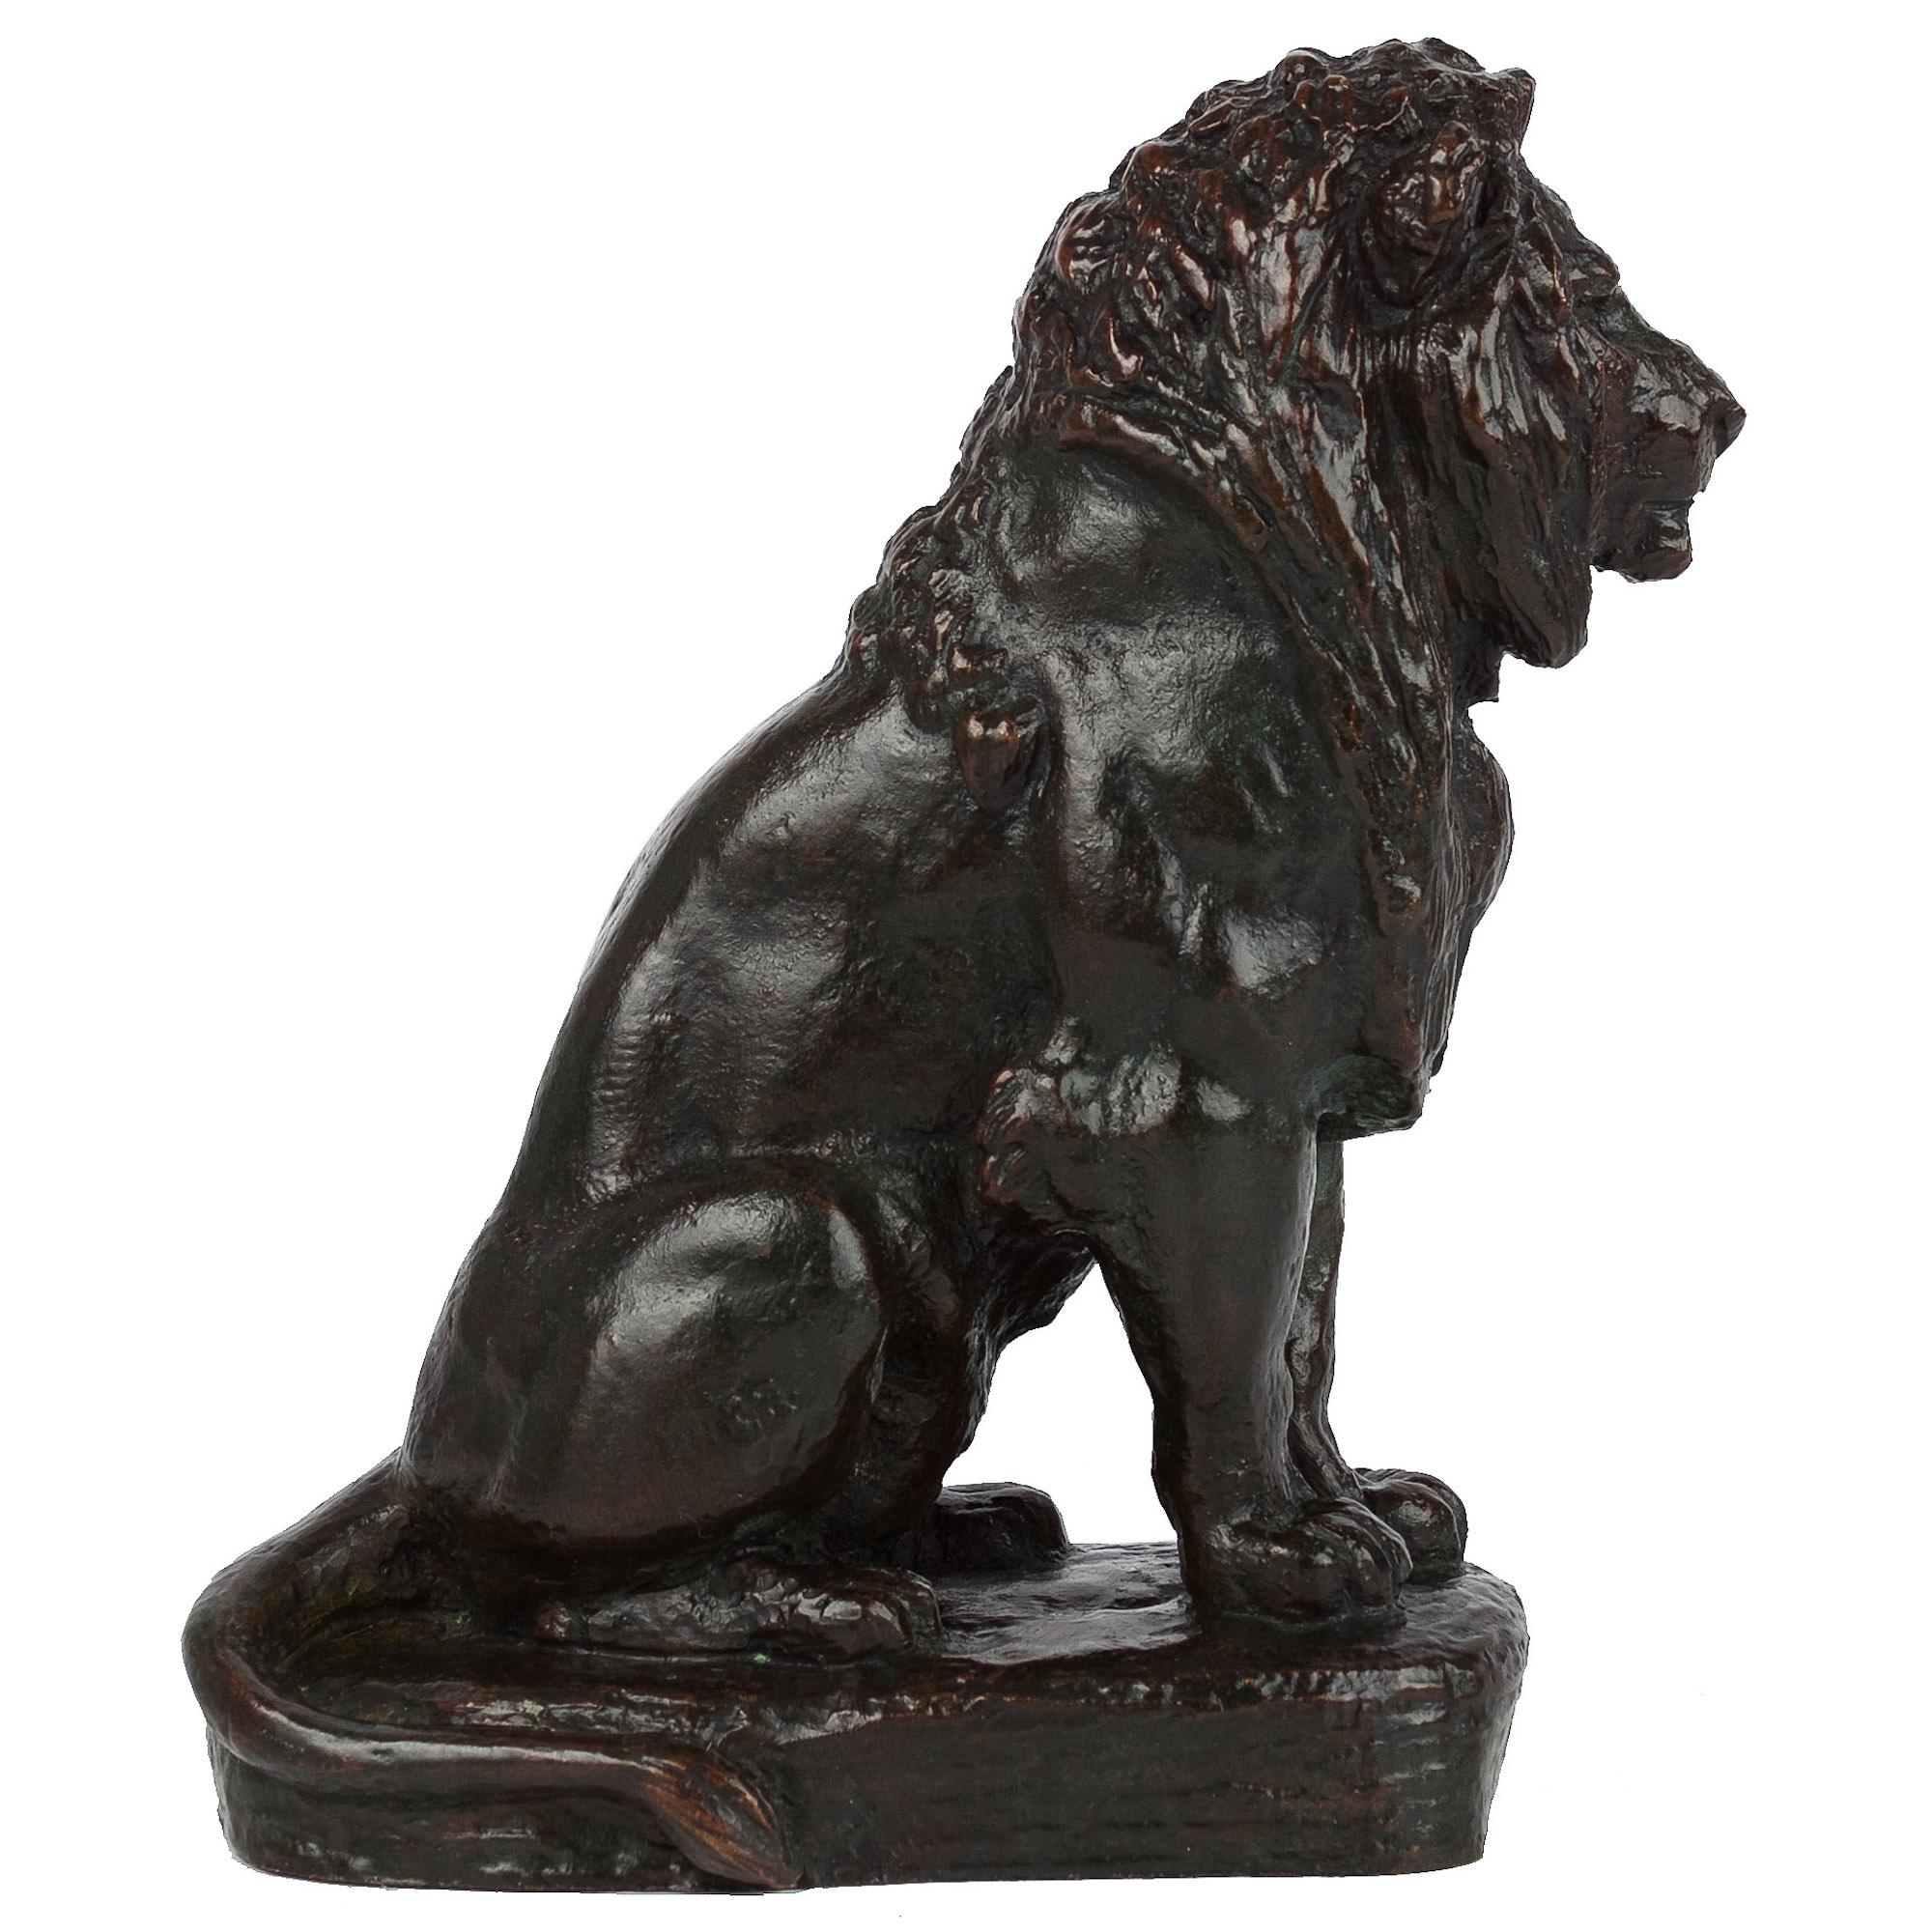 Romantic Rare French Antique Bronze Sculpture “Lion Assis no.2” after Antoine-Louis Barye